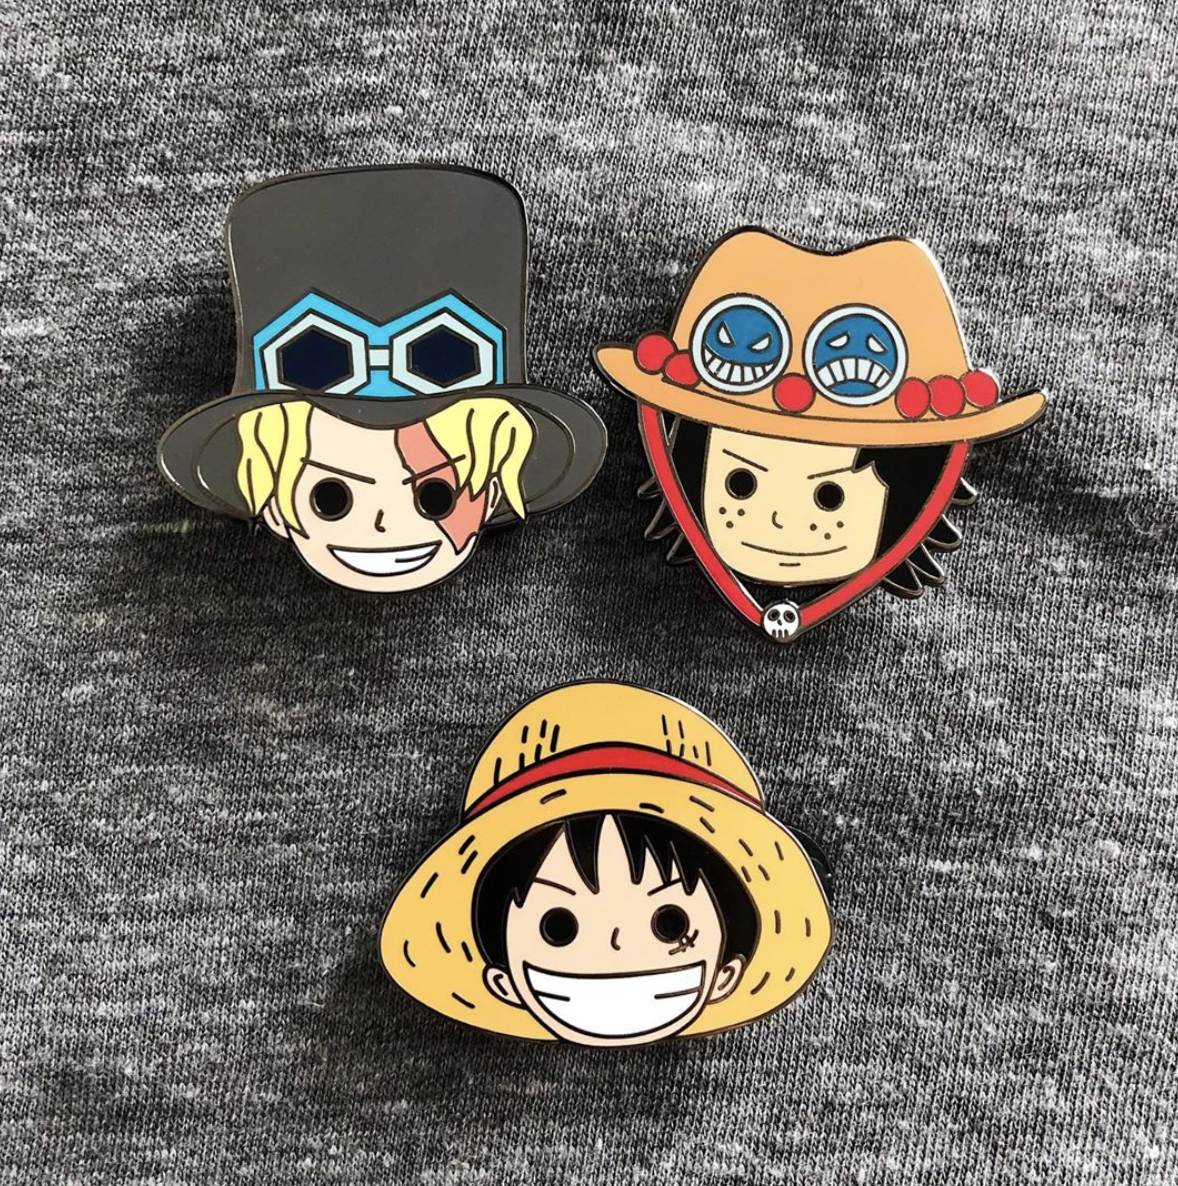 Charlotte Katakuri One Piece Hard Enamel Pin